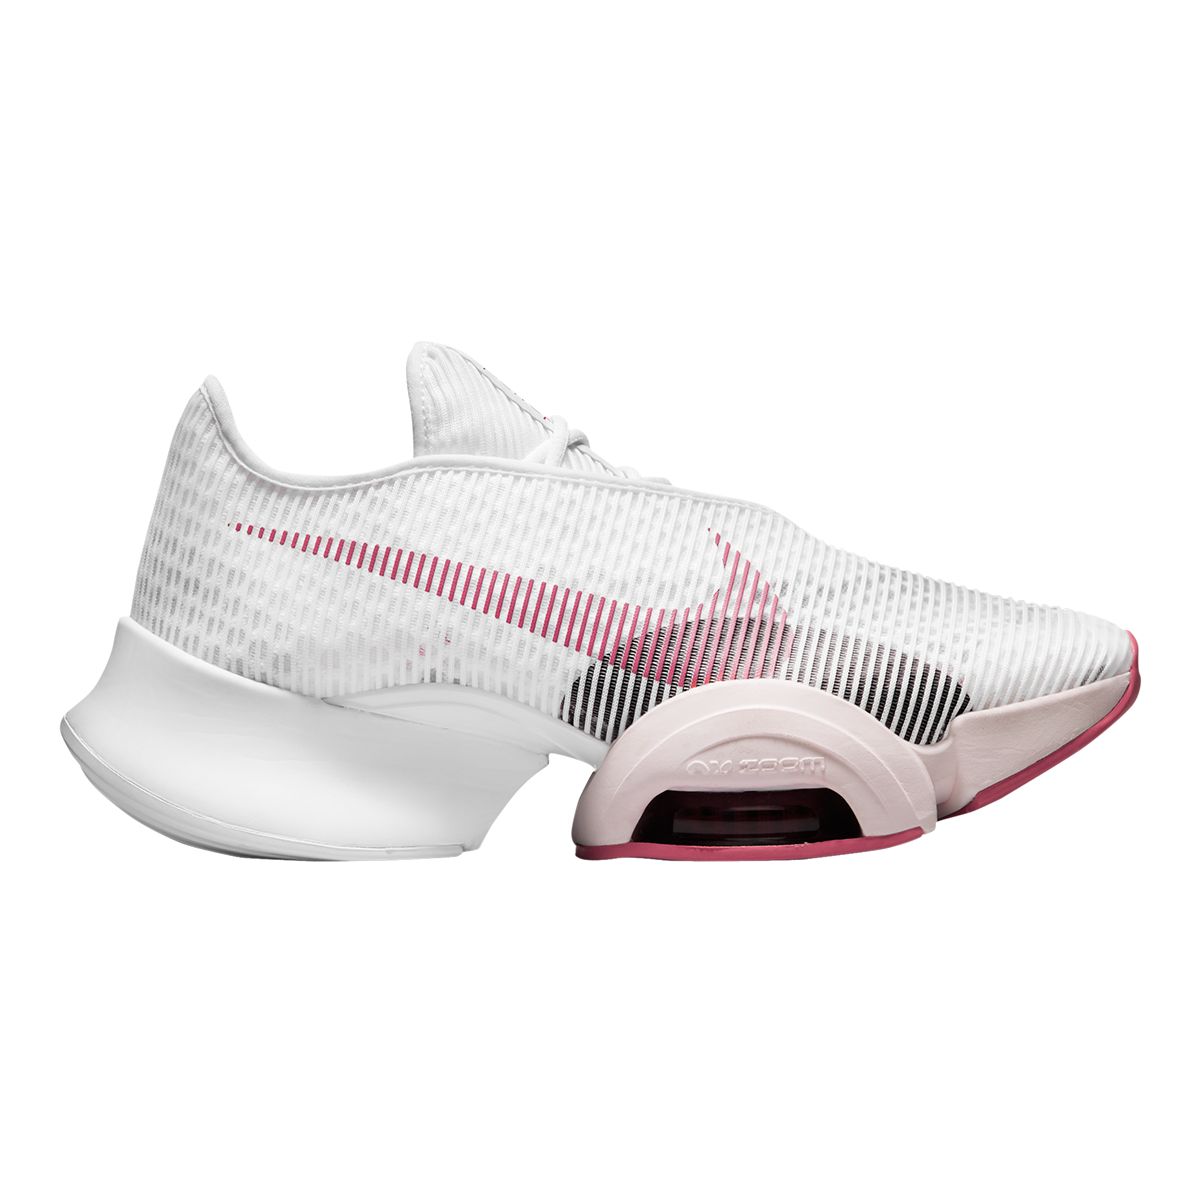 Nike Women's Superrep 2 Training Shoes, Cushioned, Mesh | Sportchek